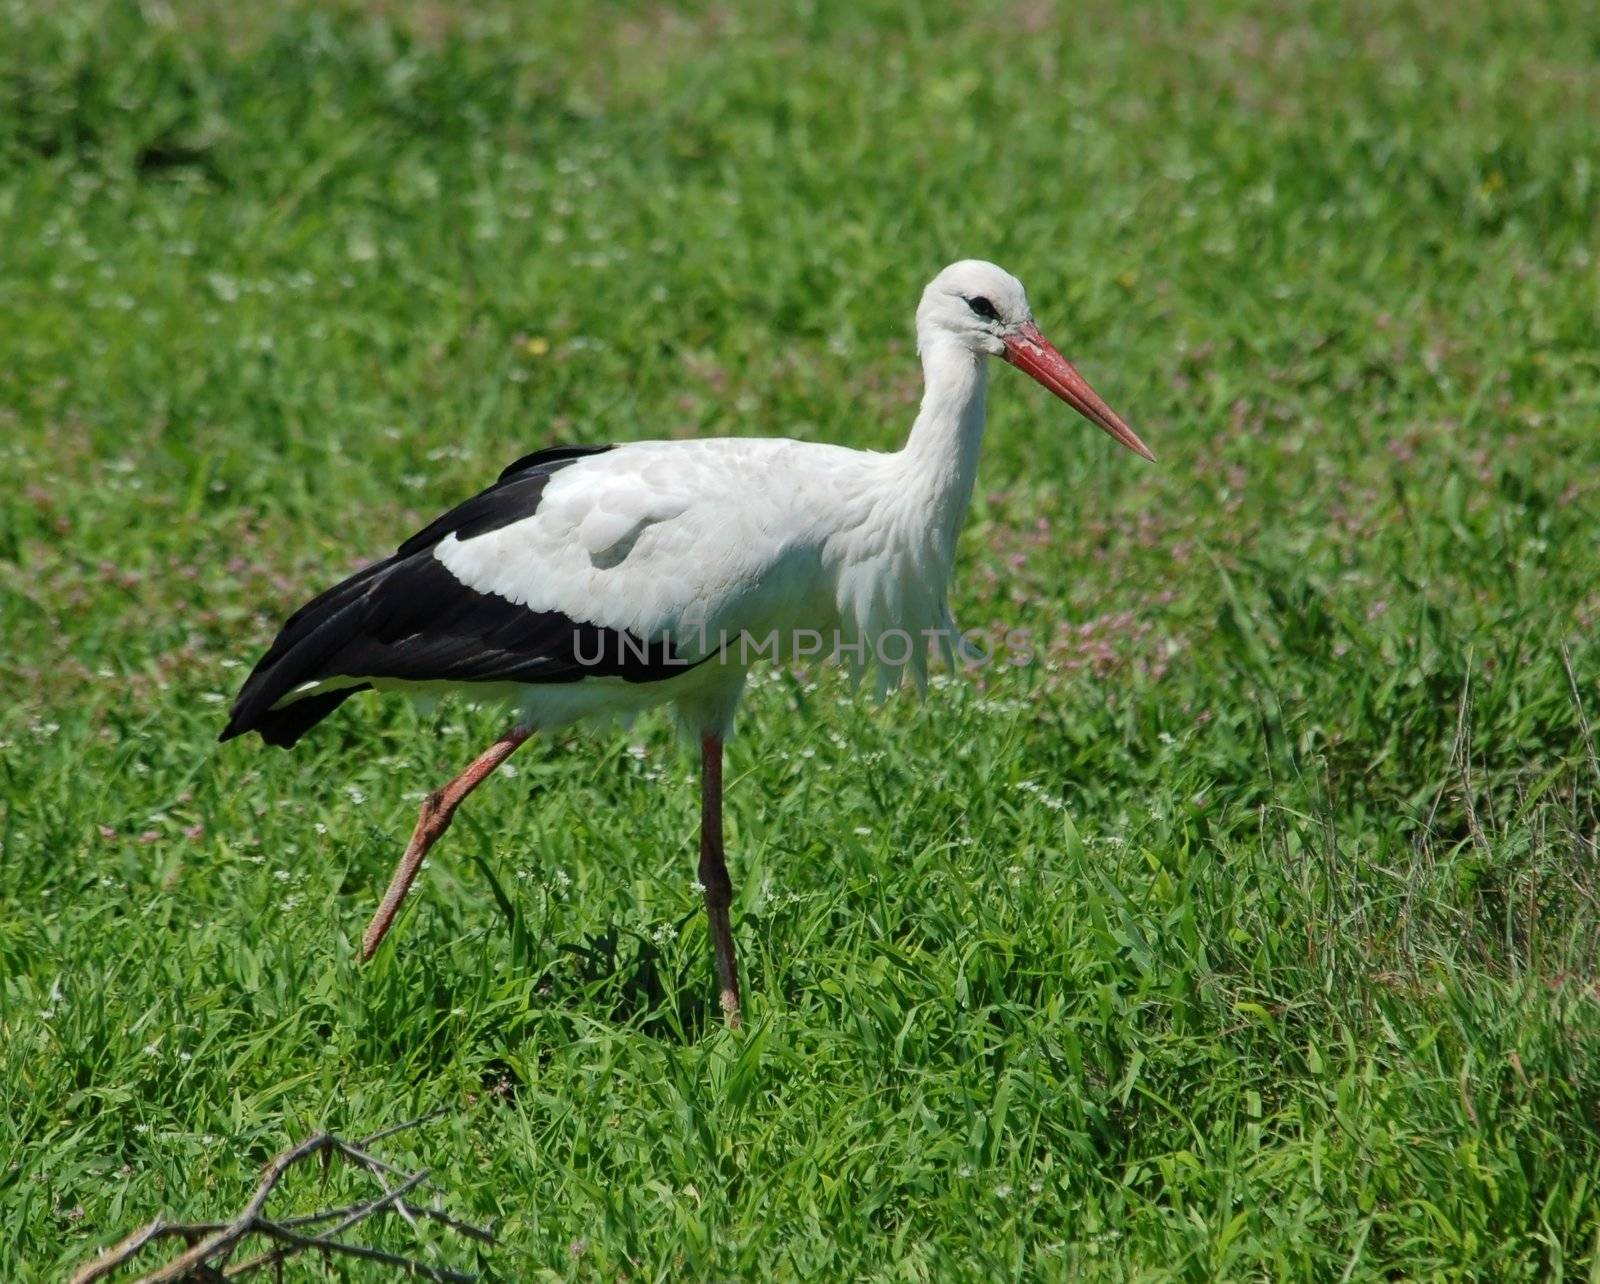 A stork feeding in South Africa